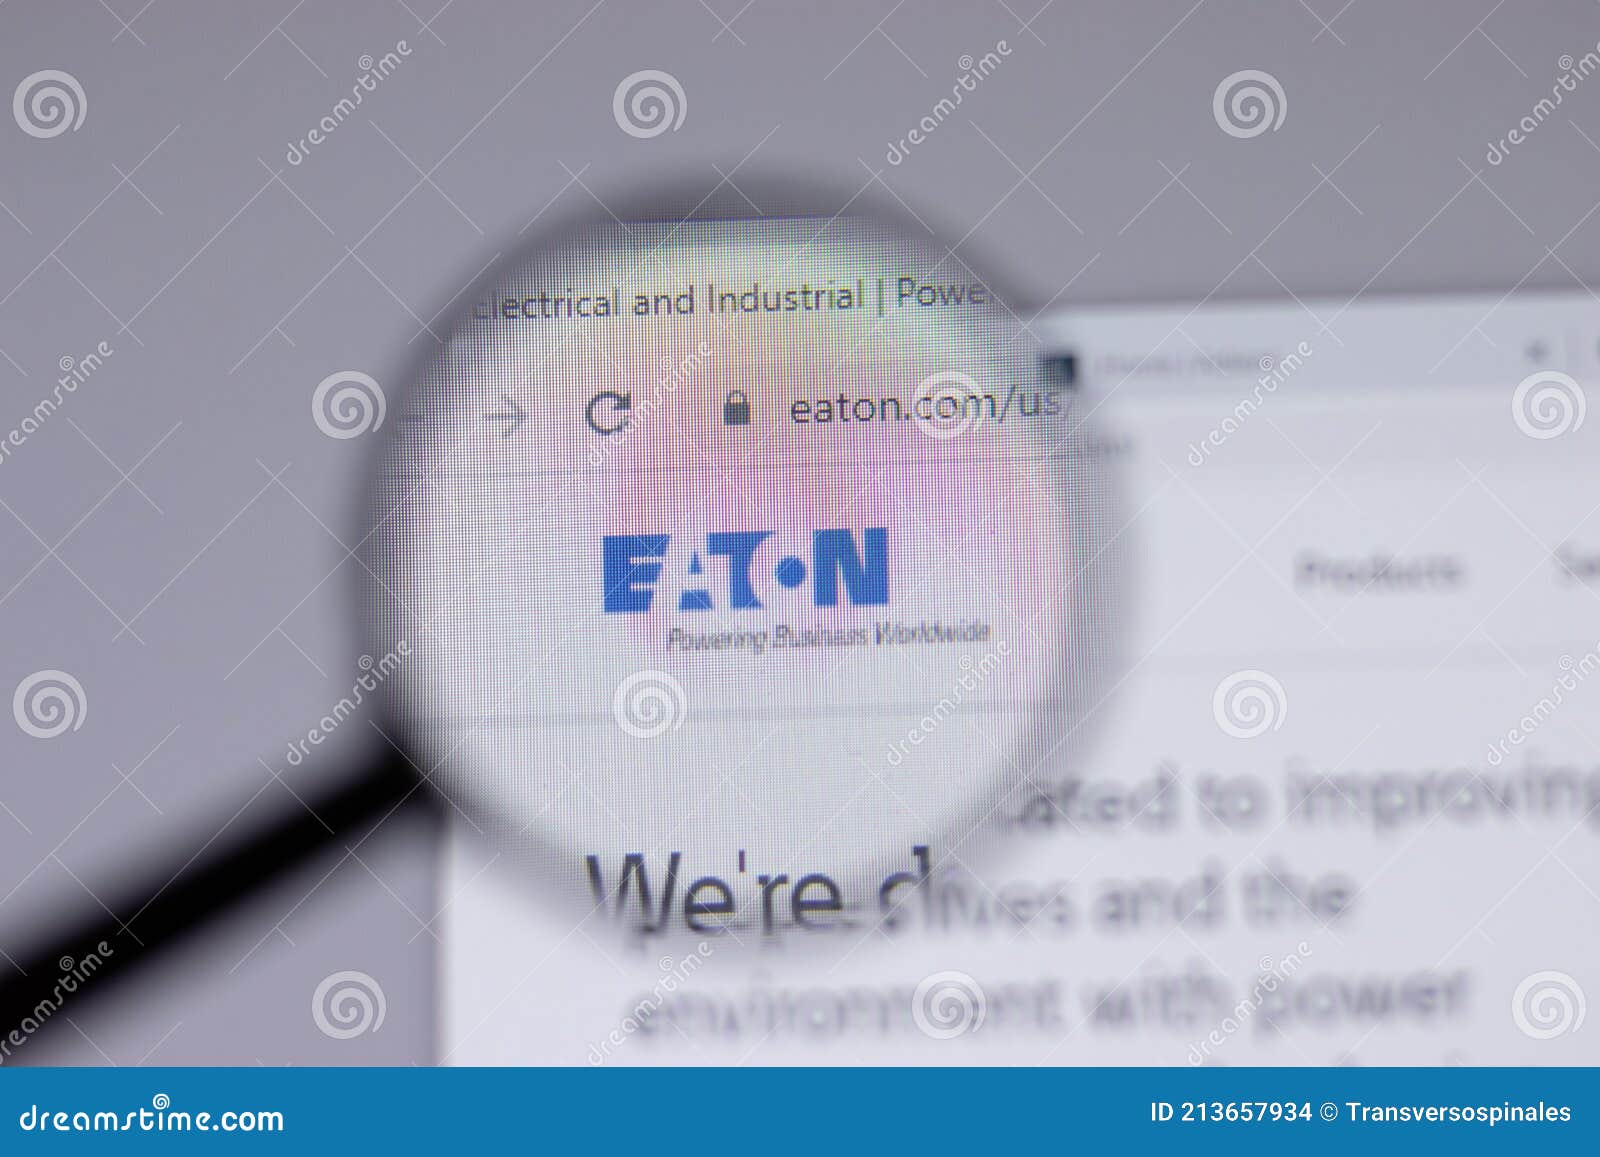 eaton corporation logo